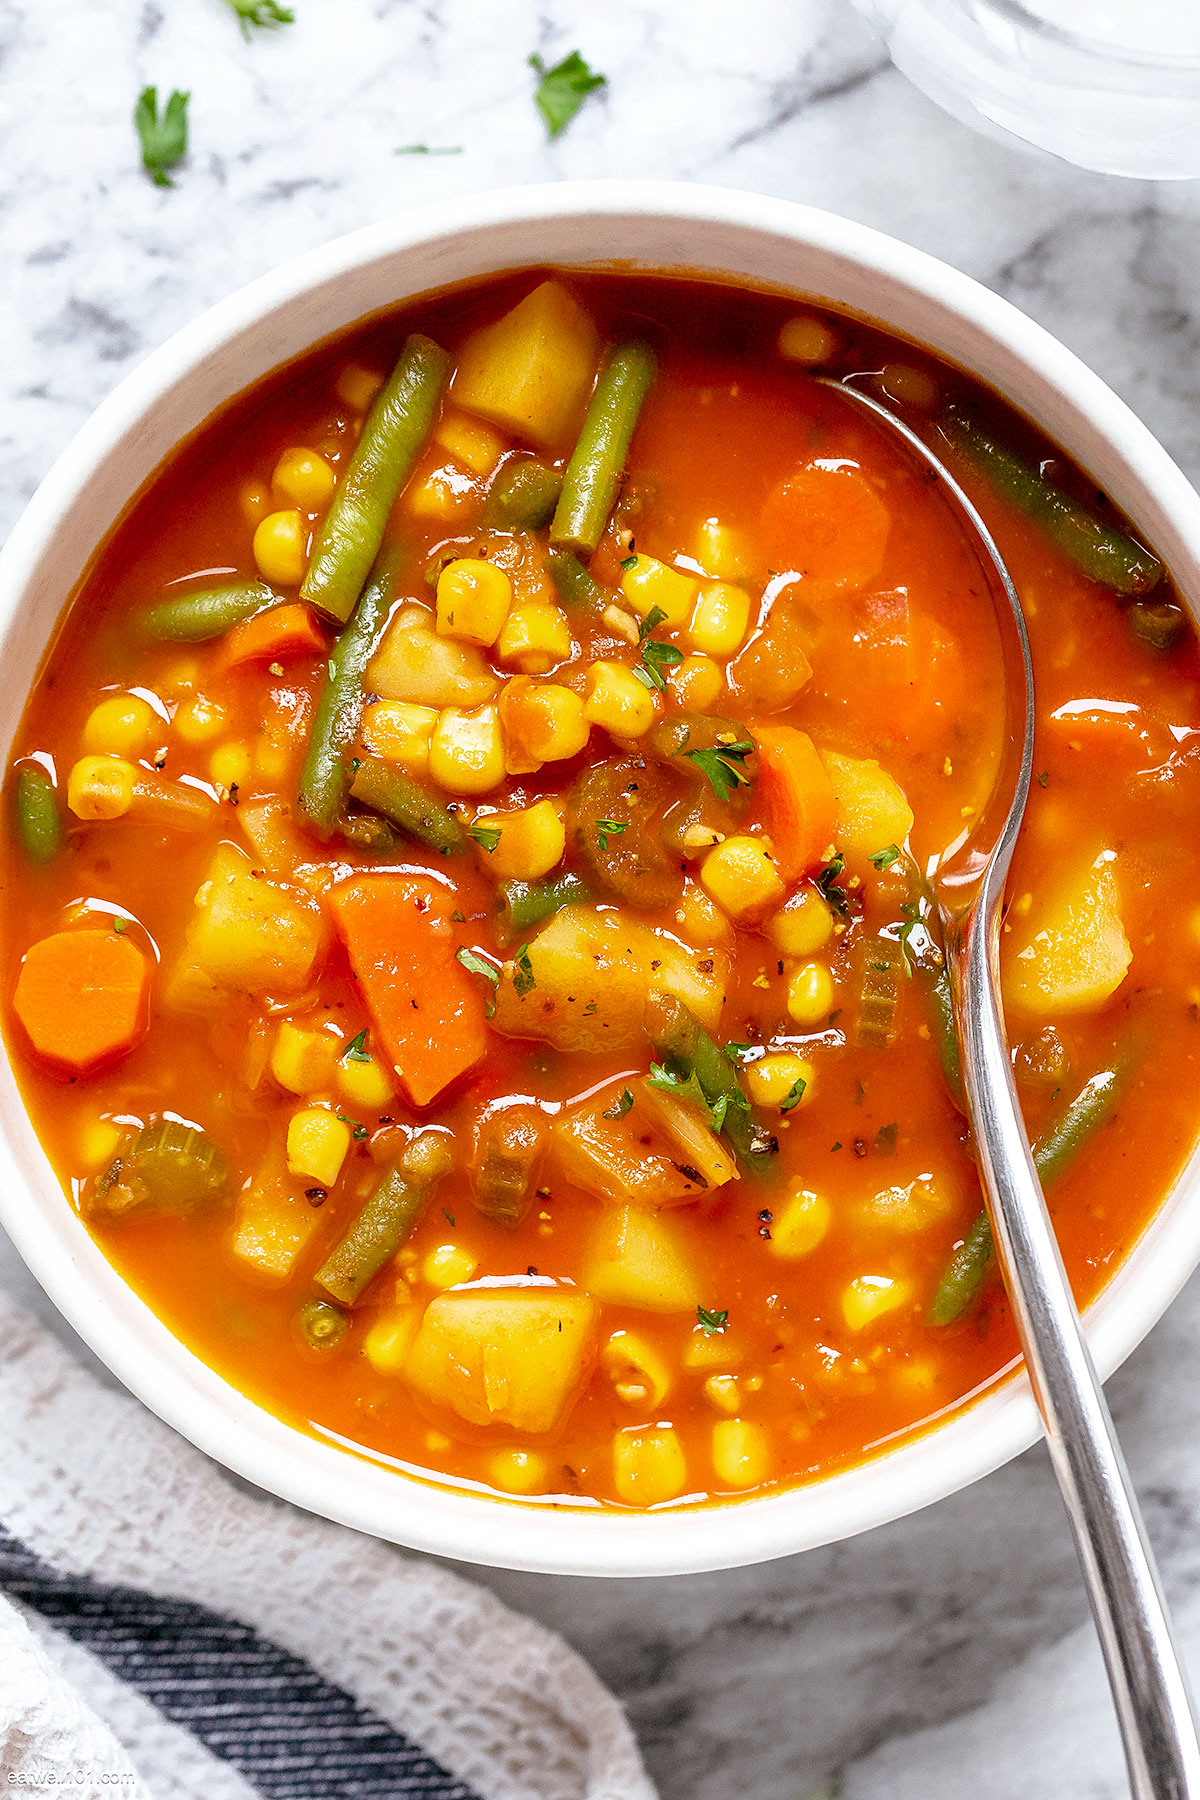 https://www.eatwell101.com/wp-content/uploads/2022/02/healthy-Slow-Cooker-Vegetable-Soup.jpg